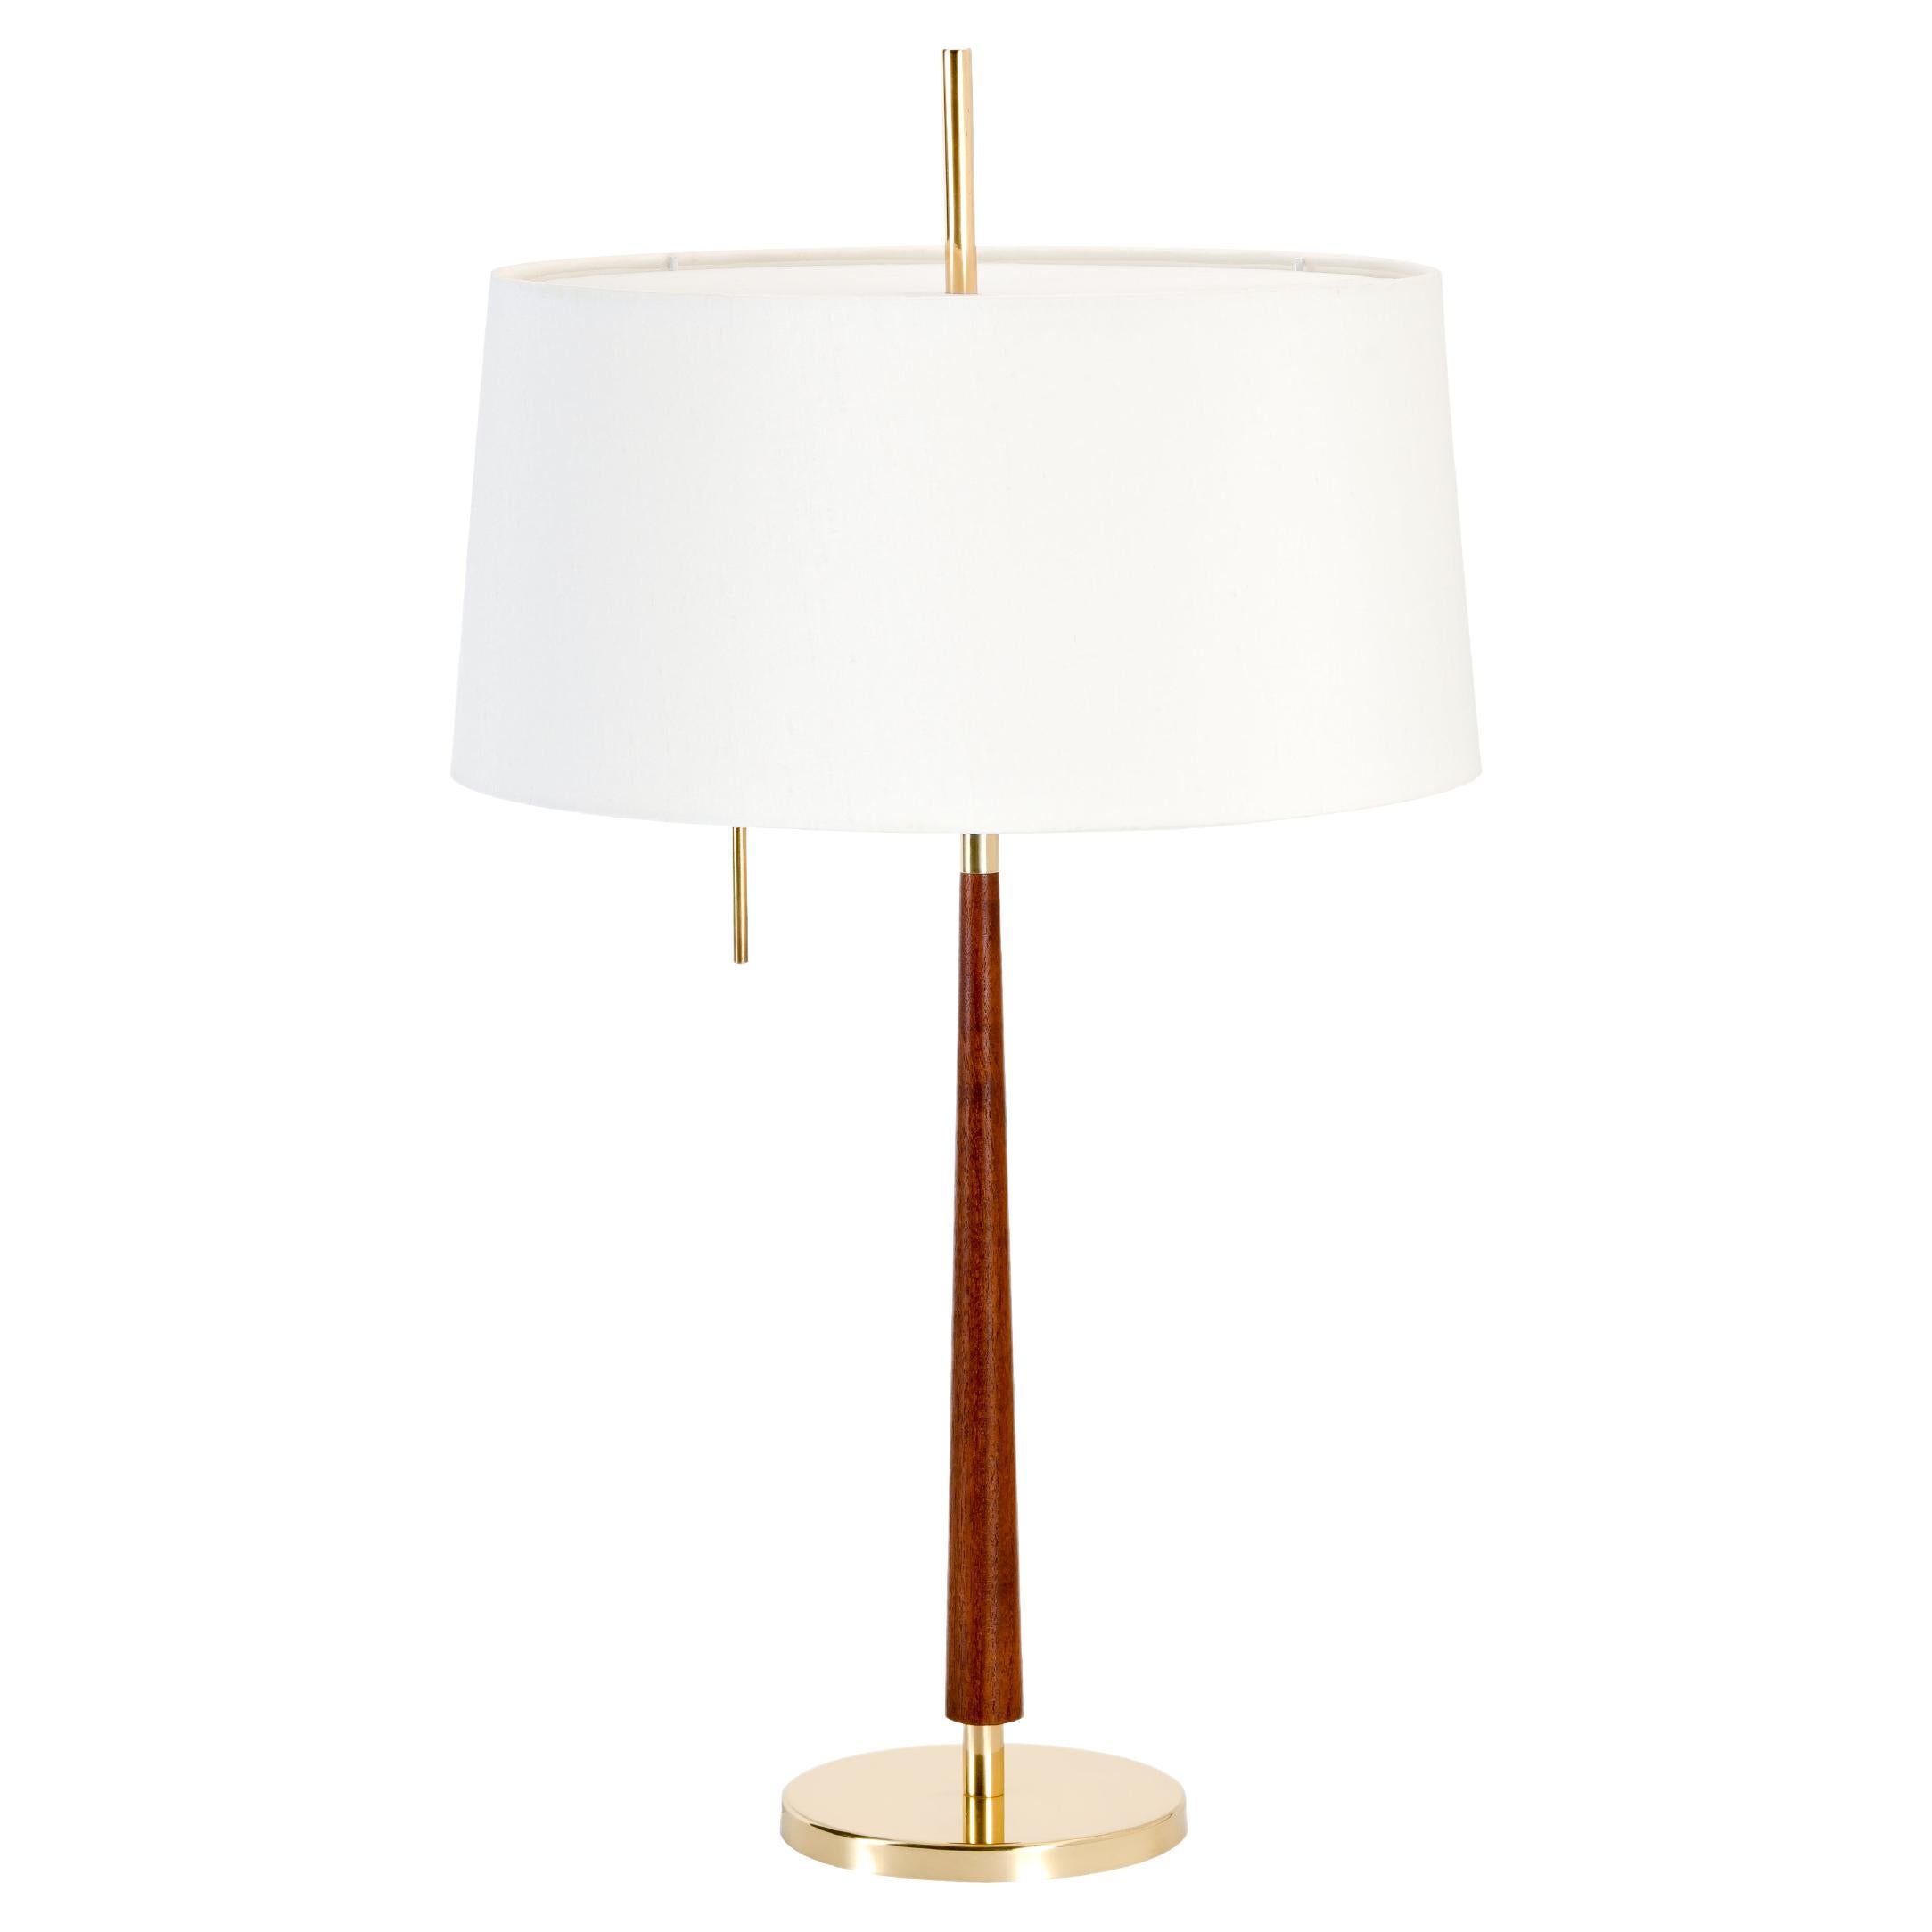 Gunnar Asplund GA6 Table Lamp, Designed in 1930's For Sale